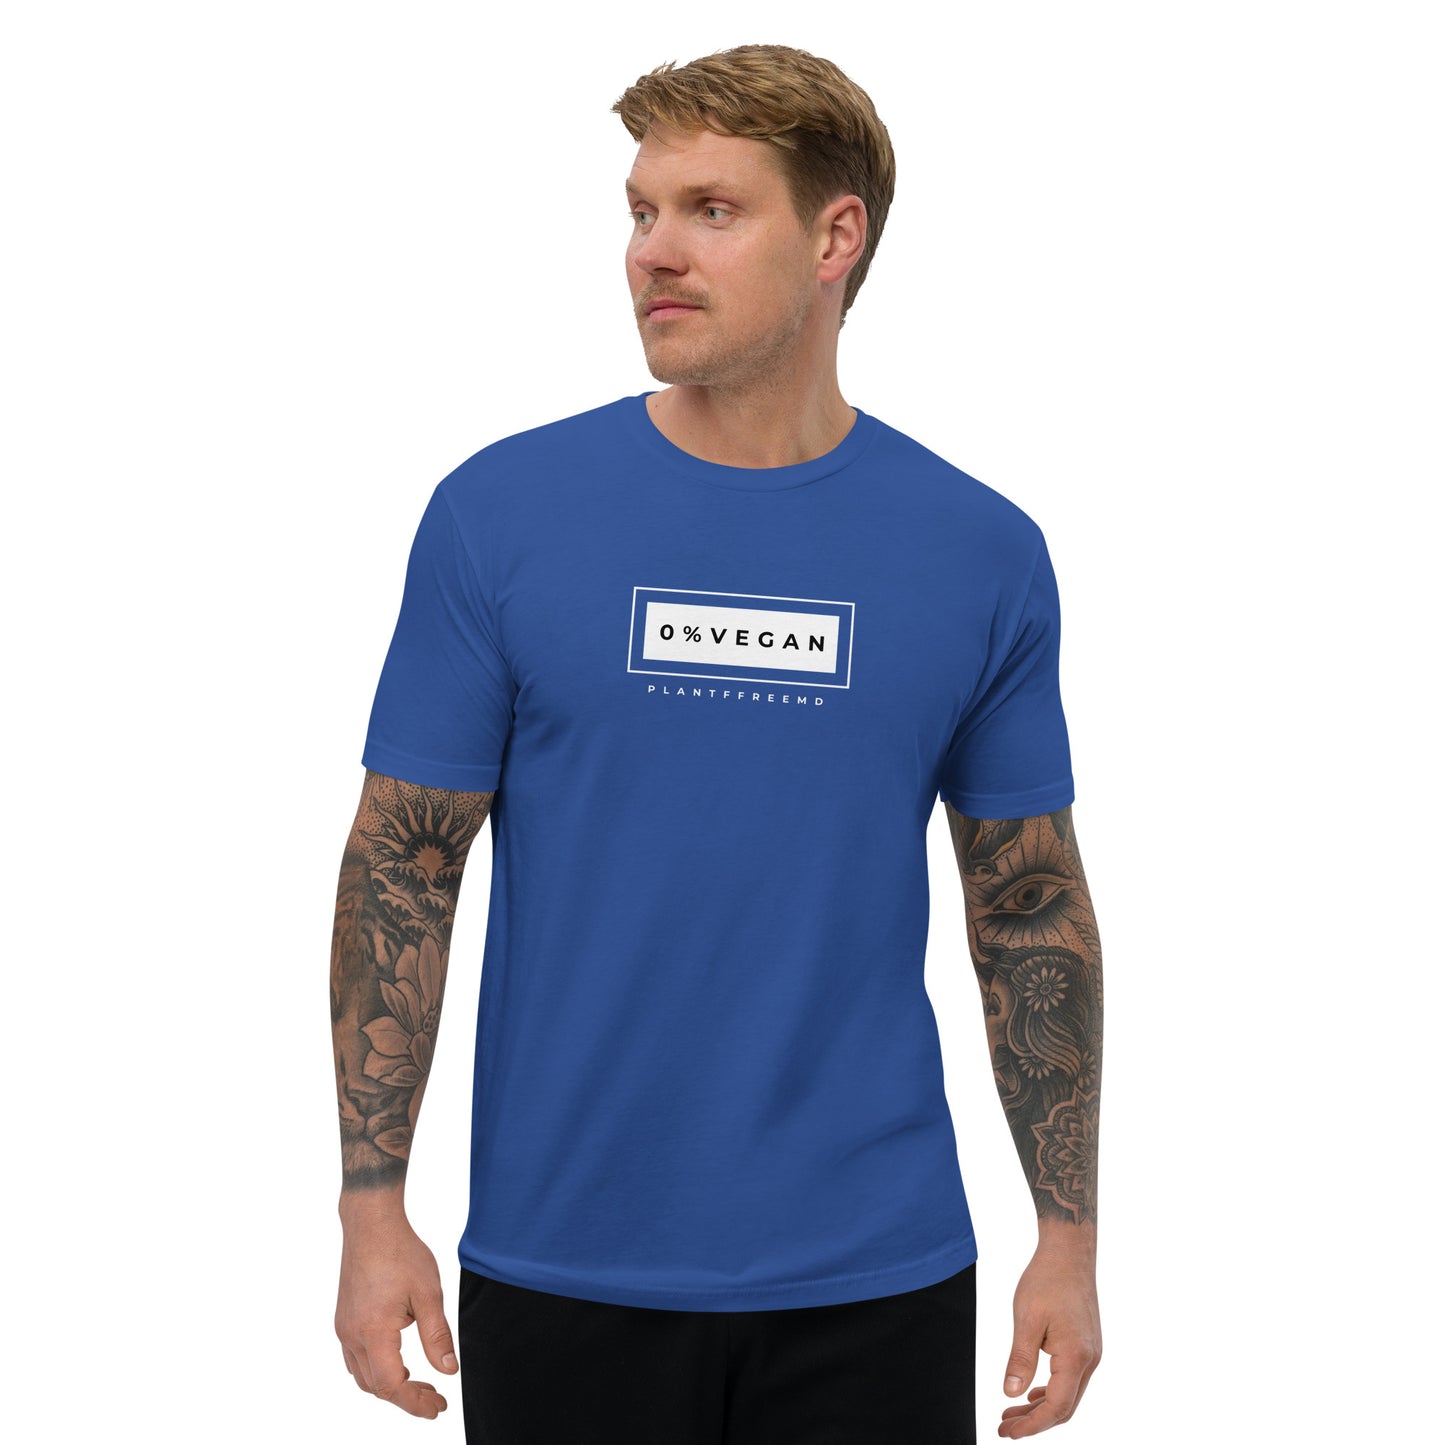 0% Vegan Men's Fitted T-shirt